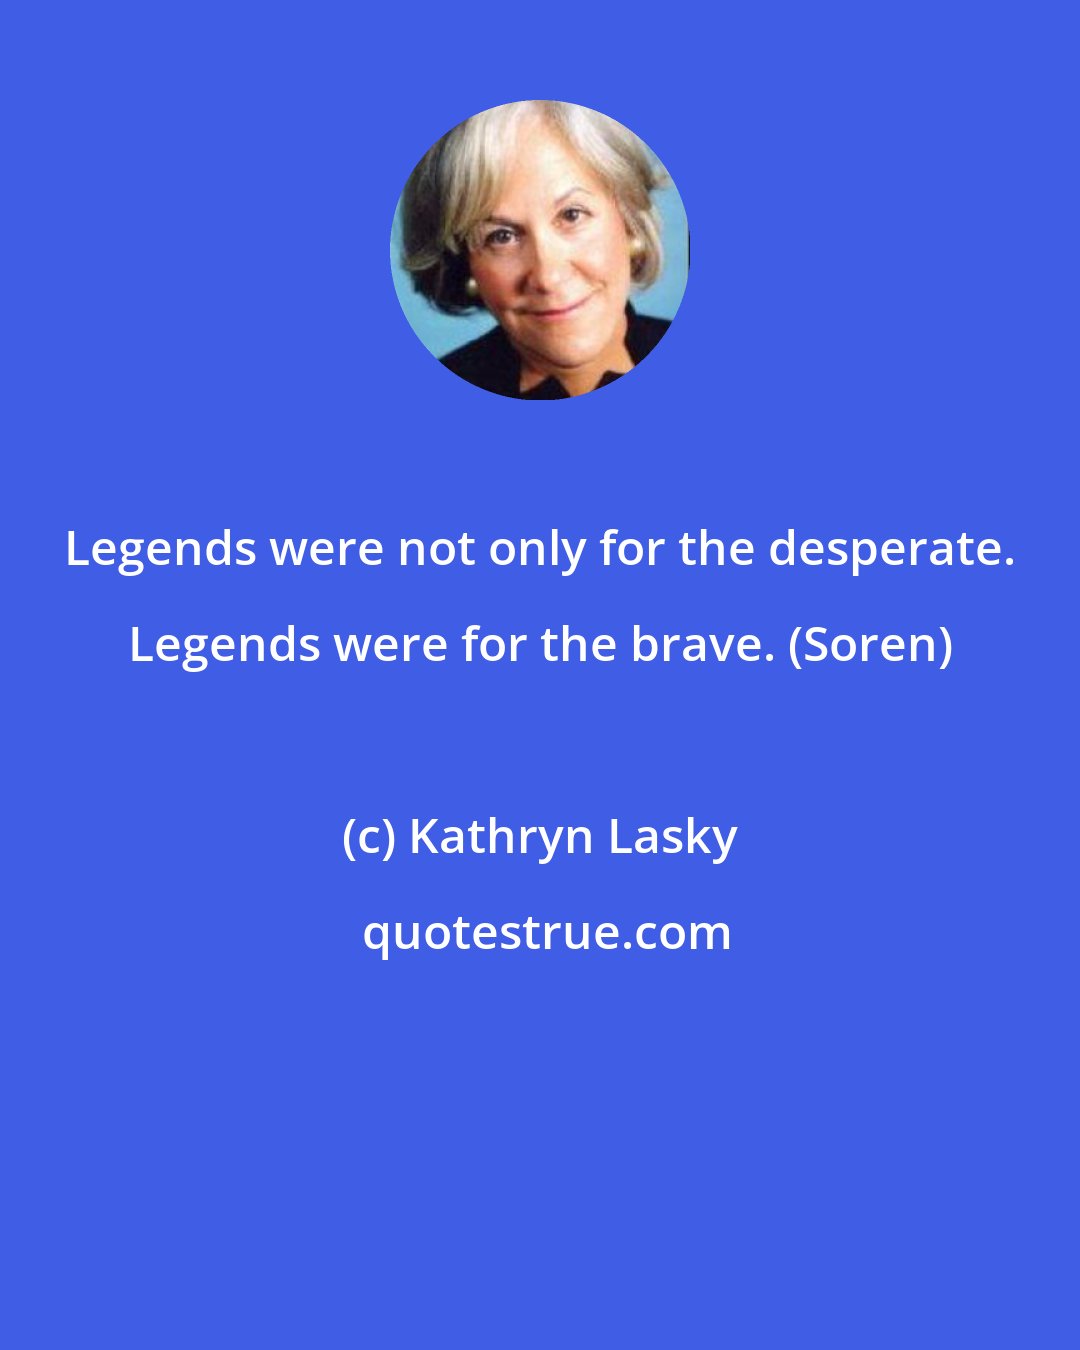 Kathryn Lasky: Legends were not only for the desperate. Legends were for the brave. (Soren)